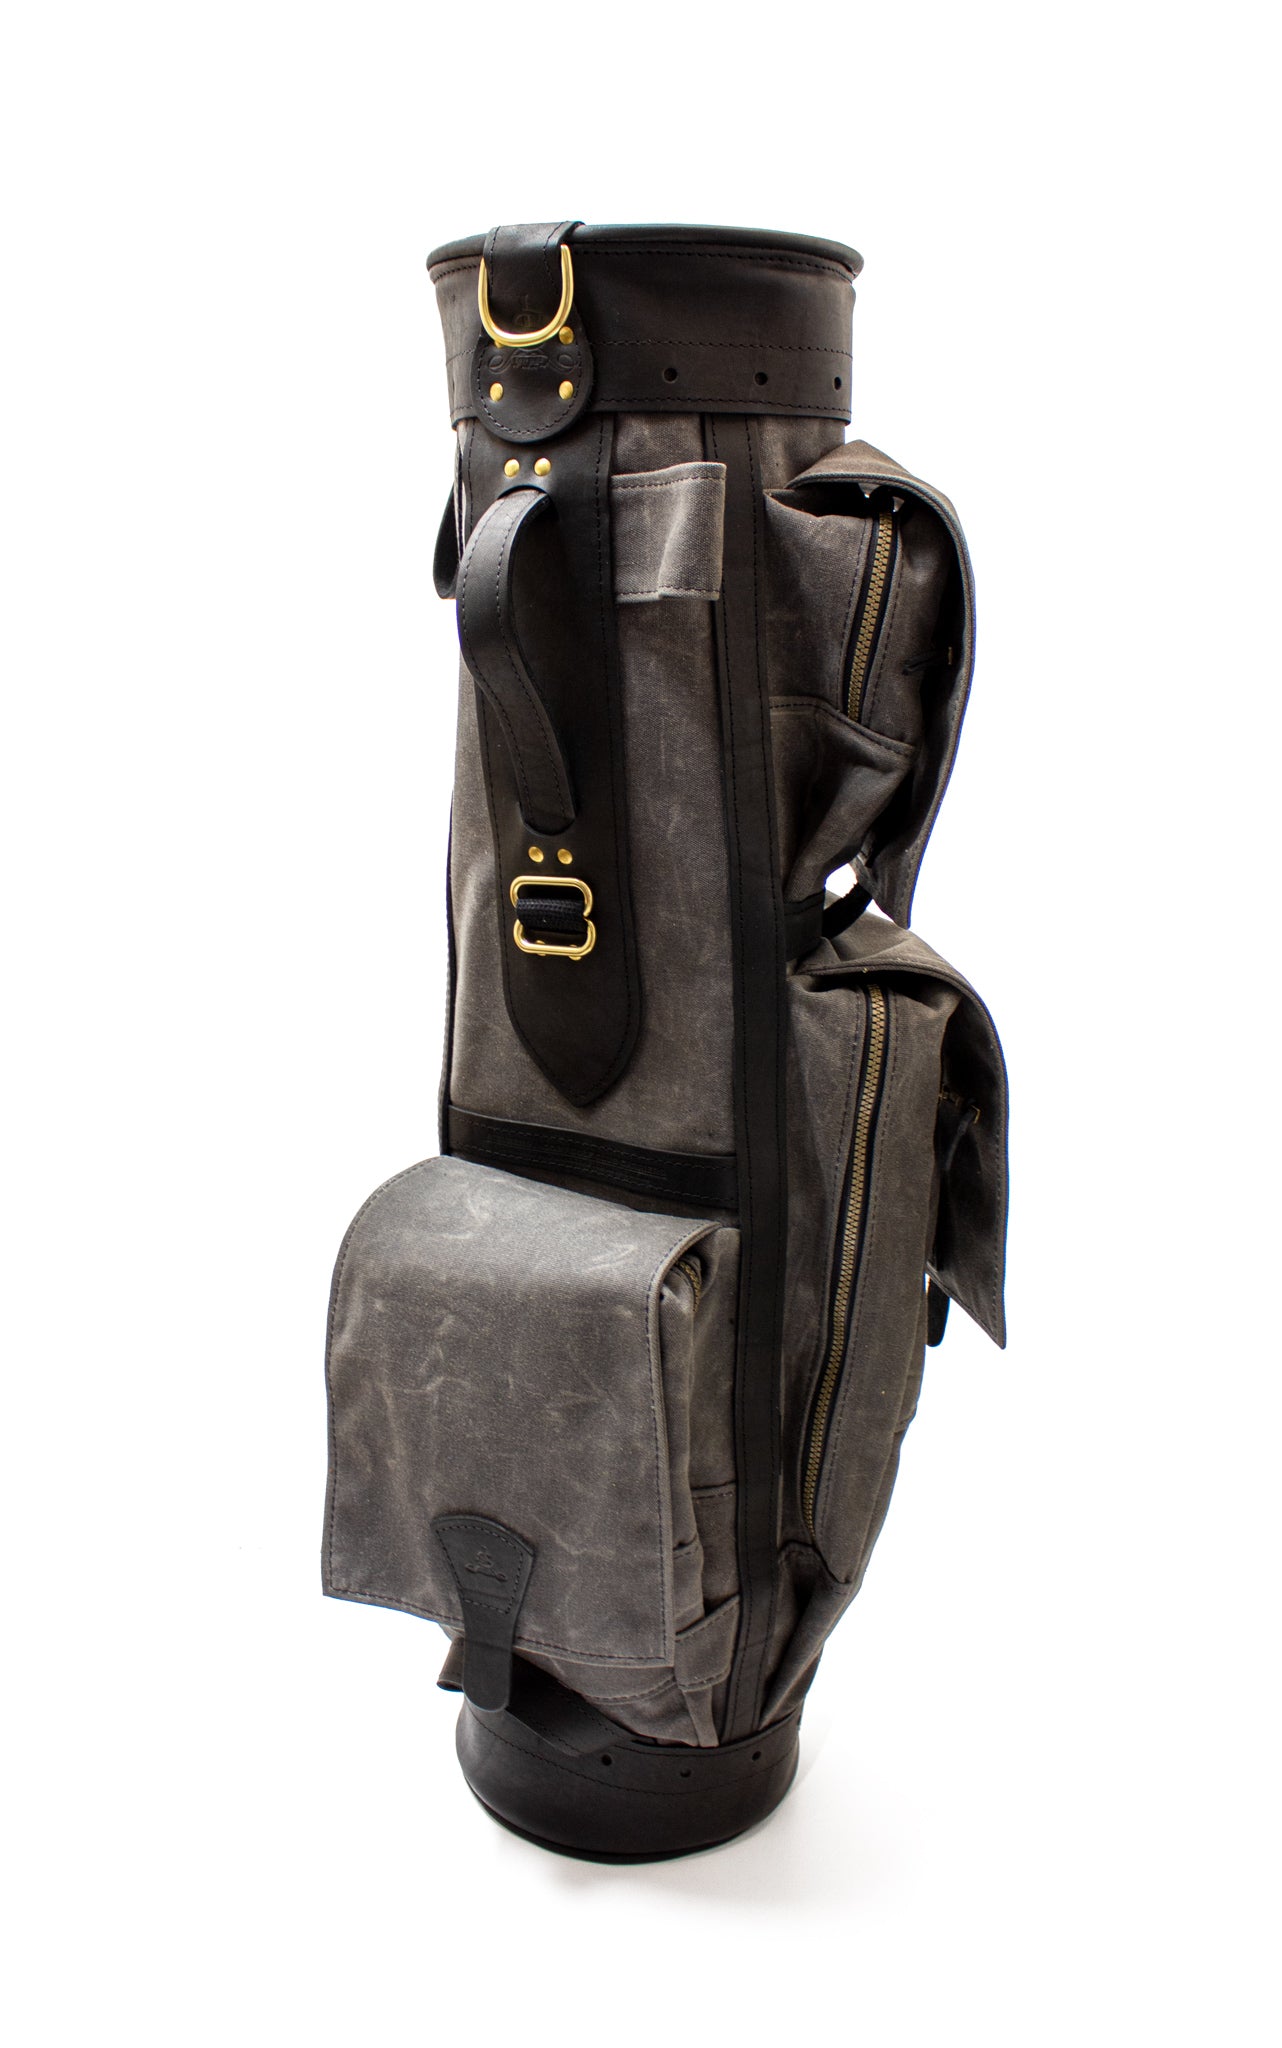 Luxury Designer Golf Bag, 54557664 